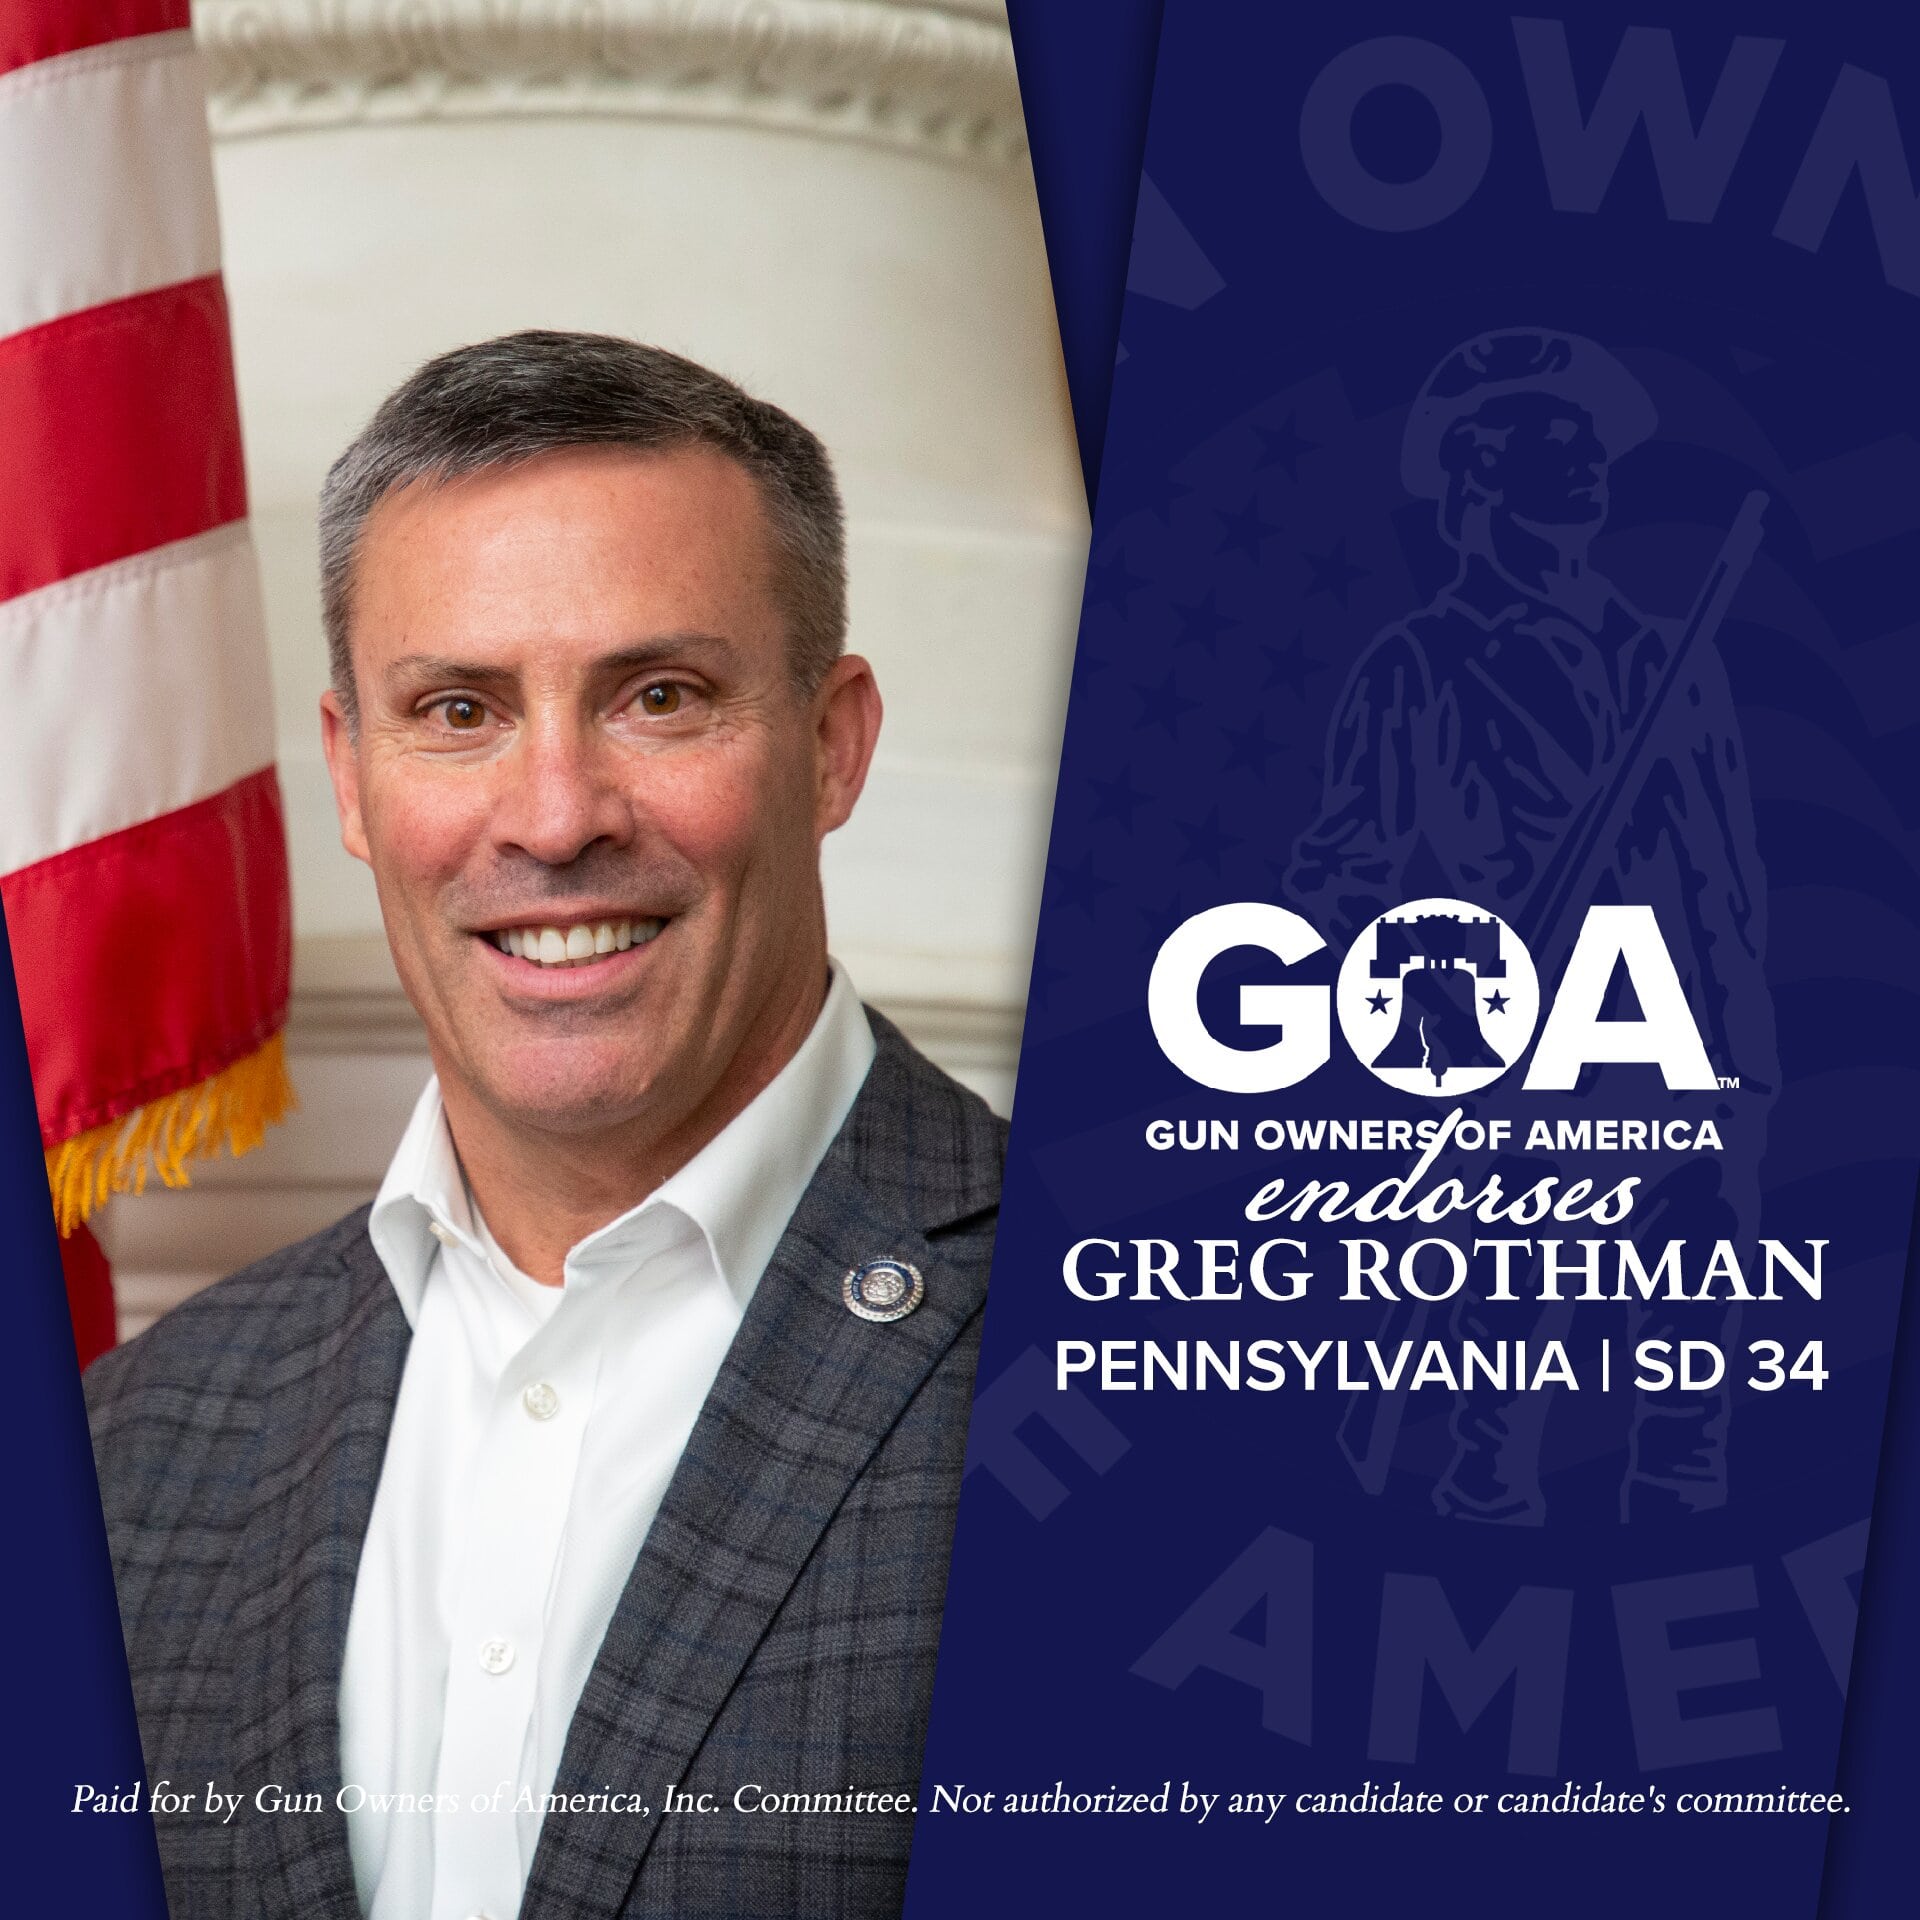 goa-endorses-rep-greg-rothman-for-state-senate-goa-pennsylvania